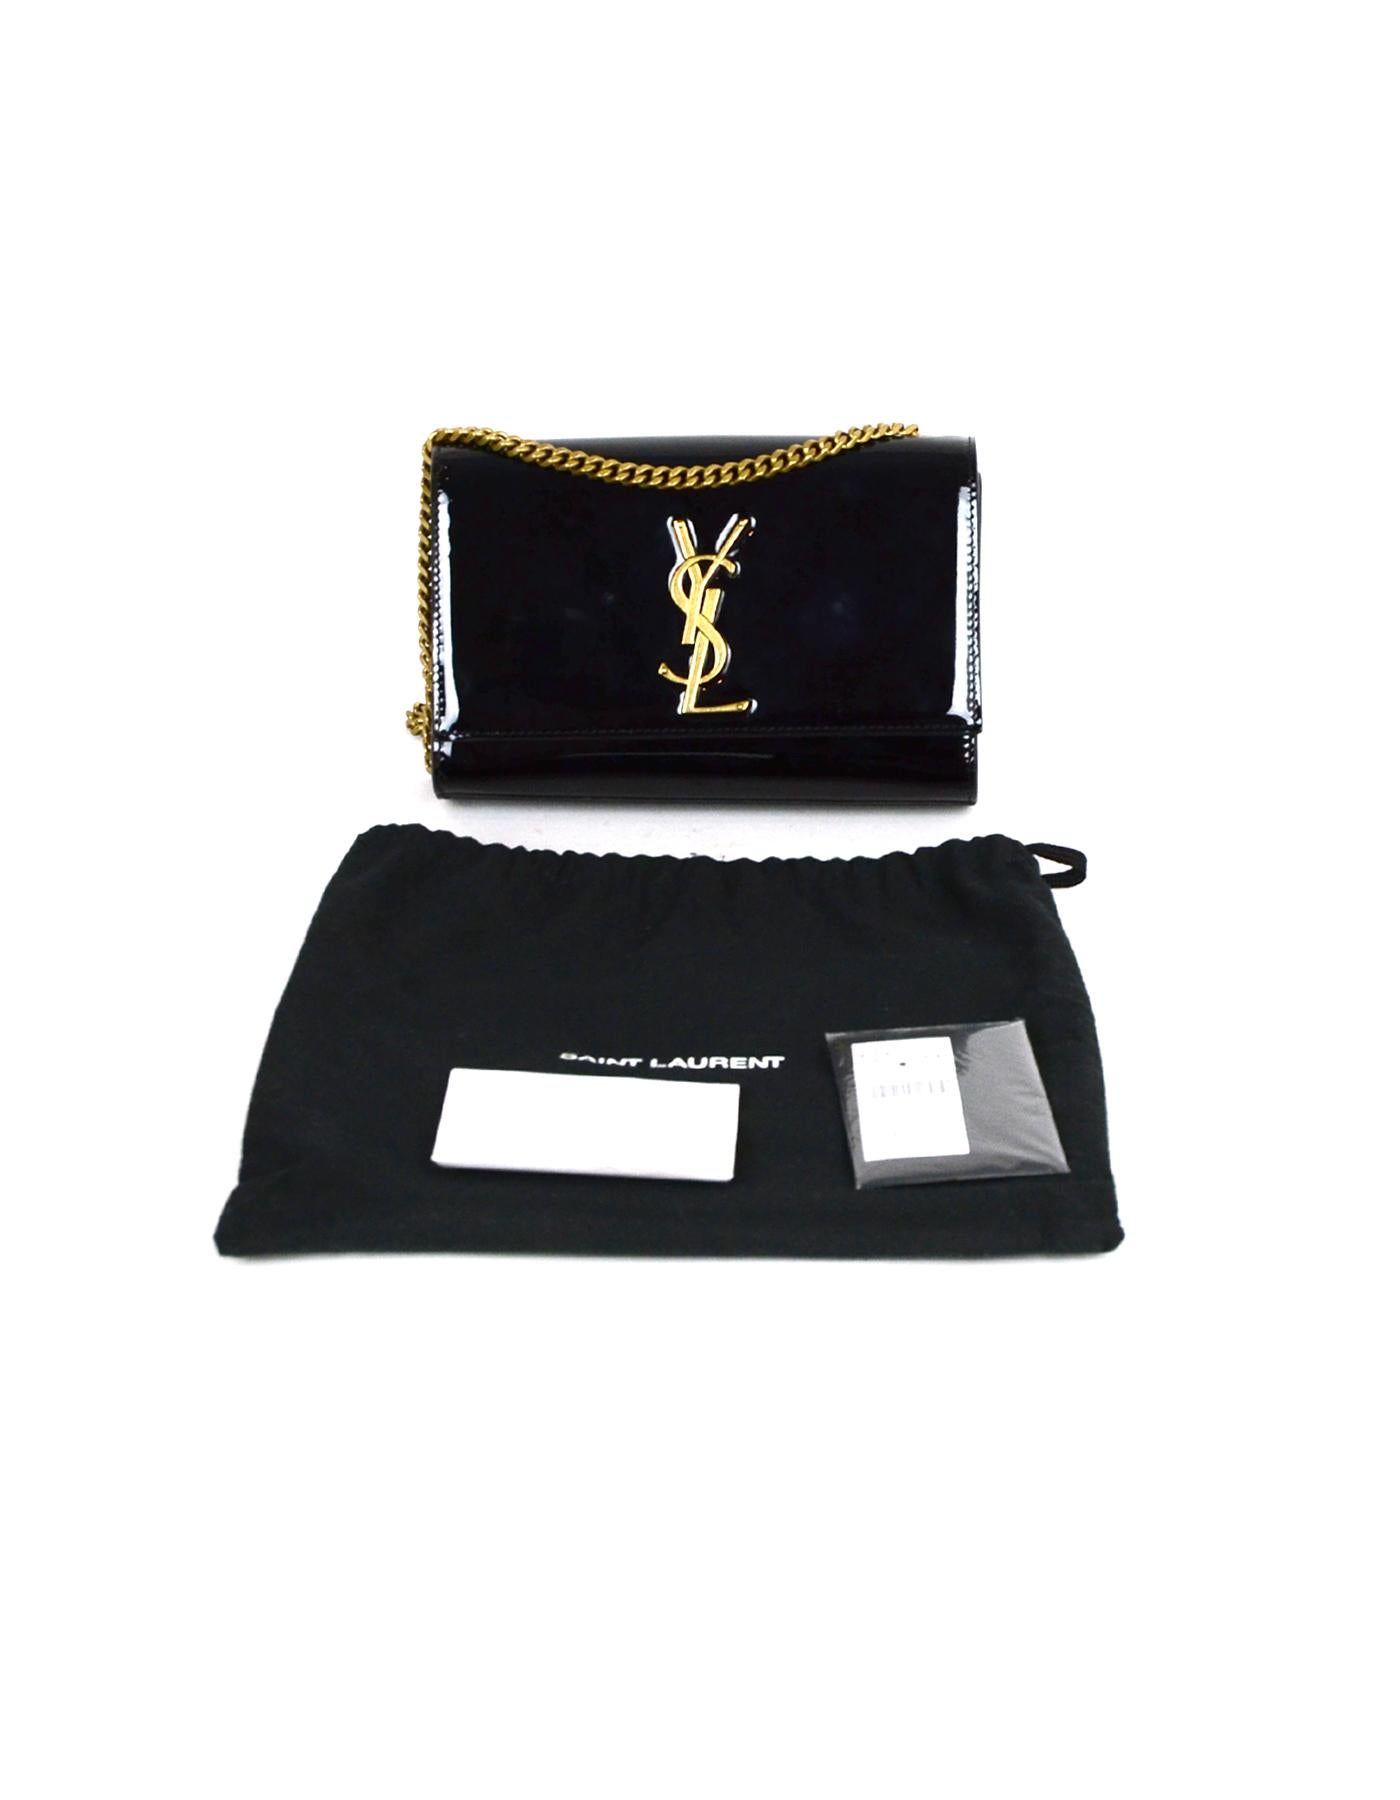 Saint Laurent Black Patent Leather Small Monogram Kate Crossbody Bag 6